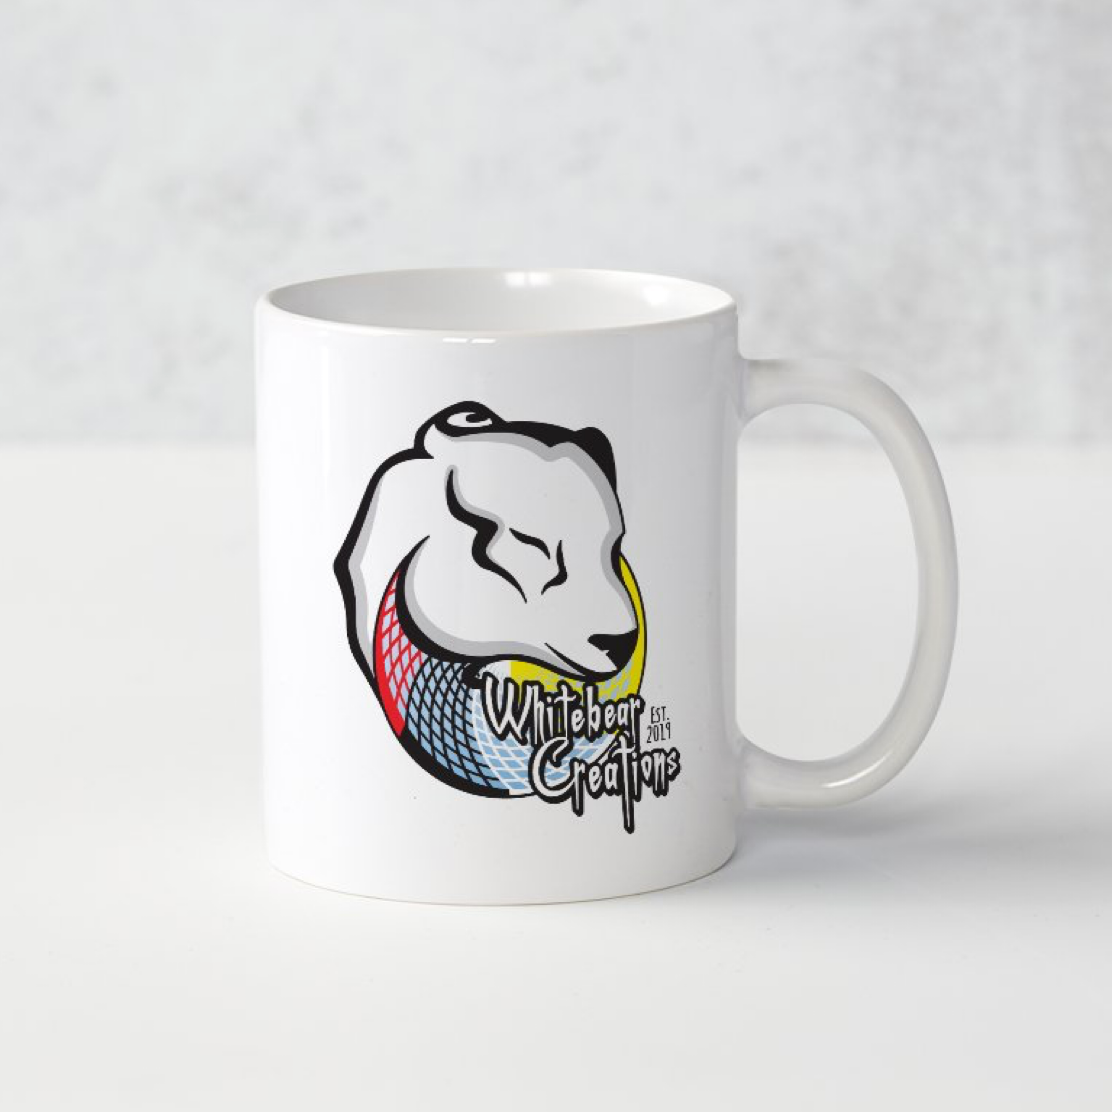 Whitebear Creations Mug